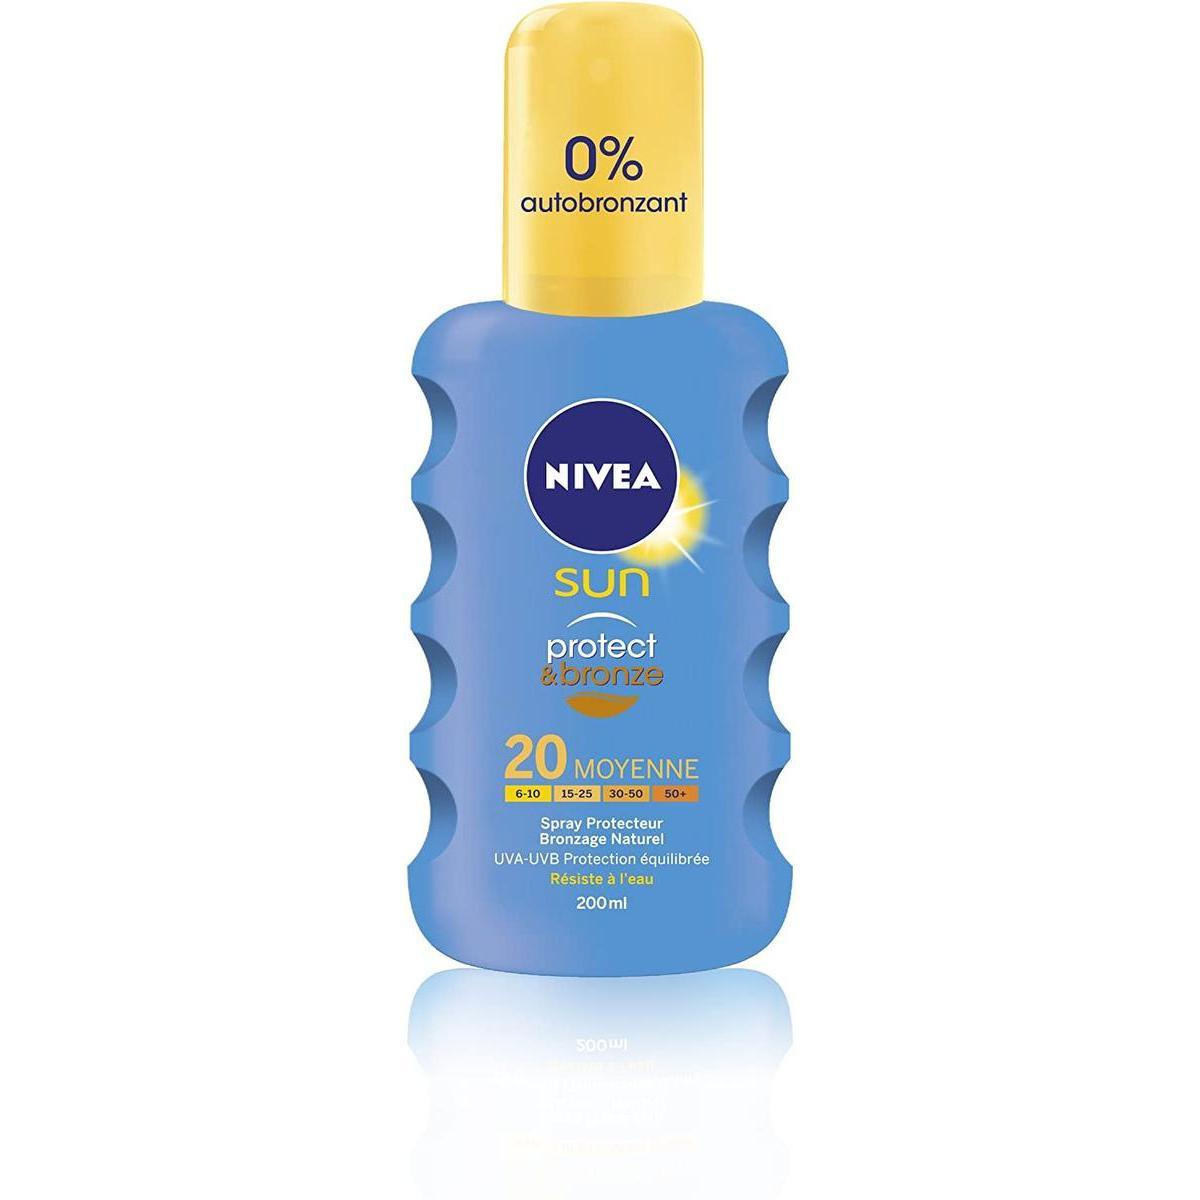 Spray Protect & Bronze - 200 ml - NIVEA SUN